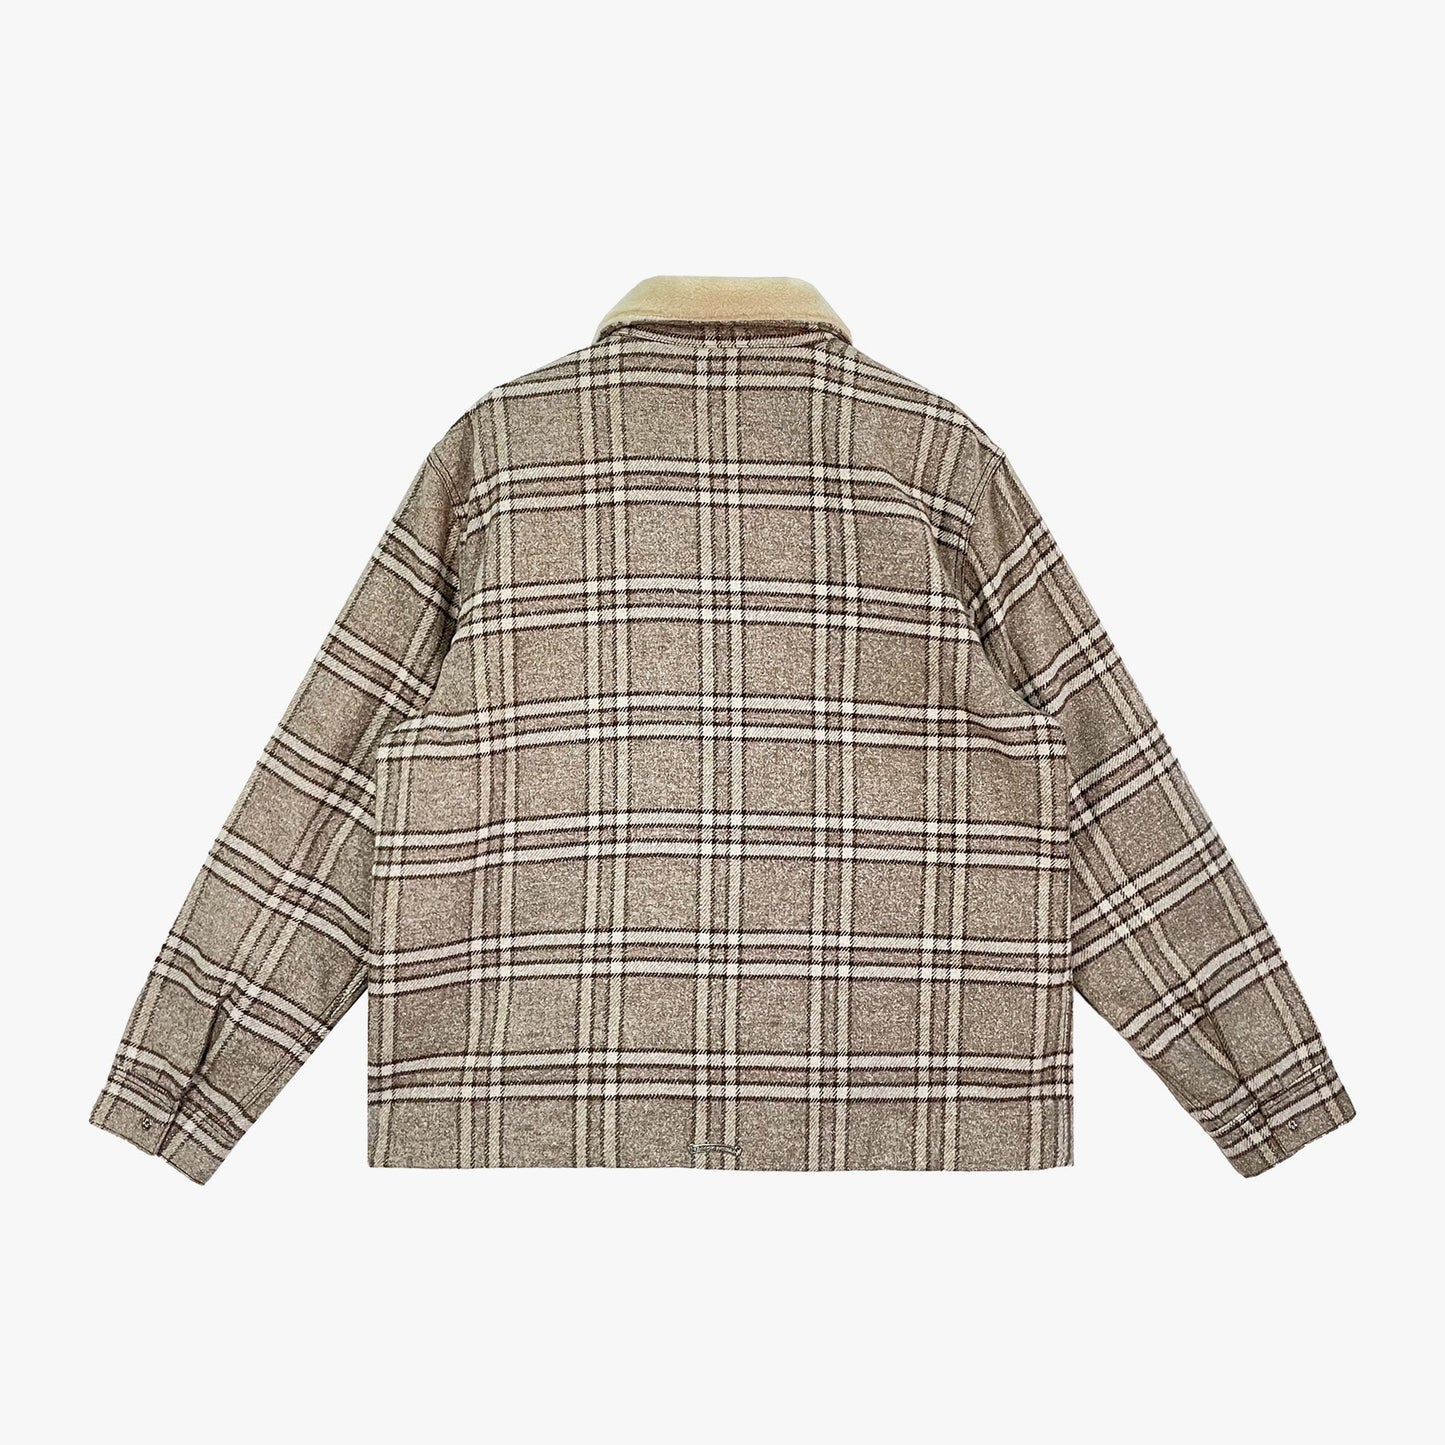 Chrome Hearts Fur Collar Zip Up Jacket - SHENGLI ROAD MARKET